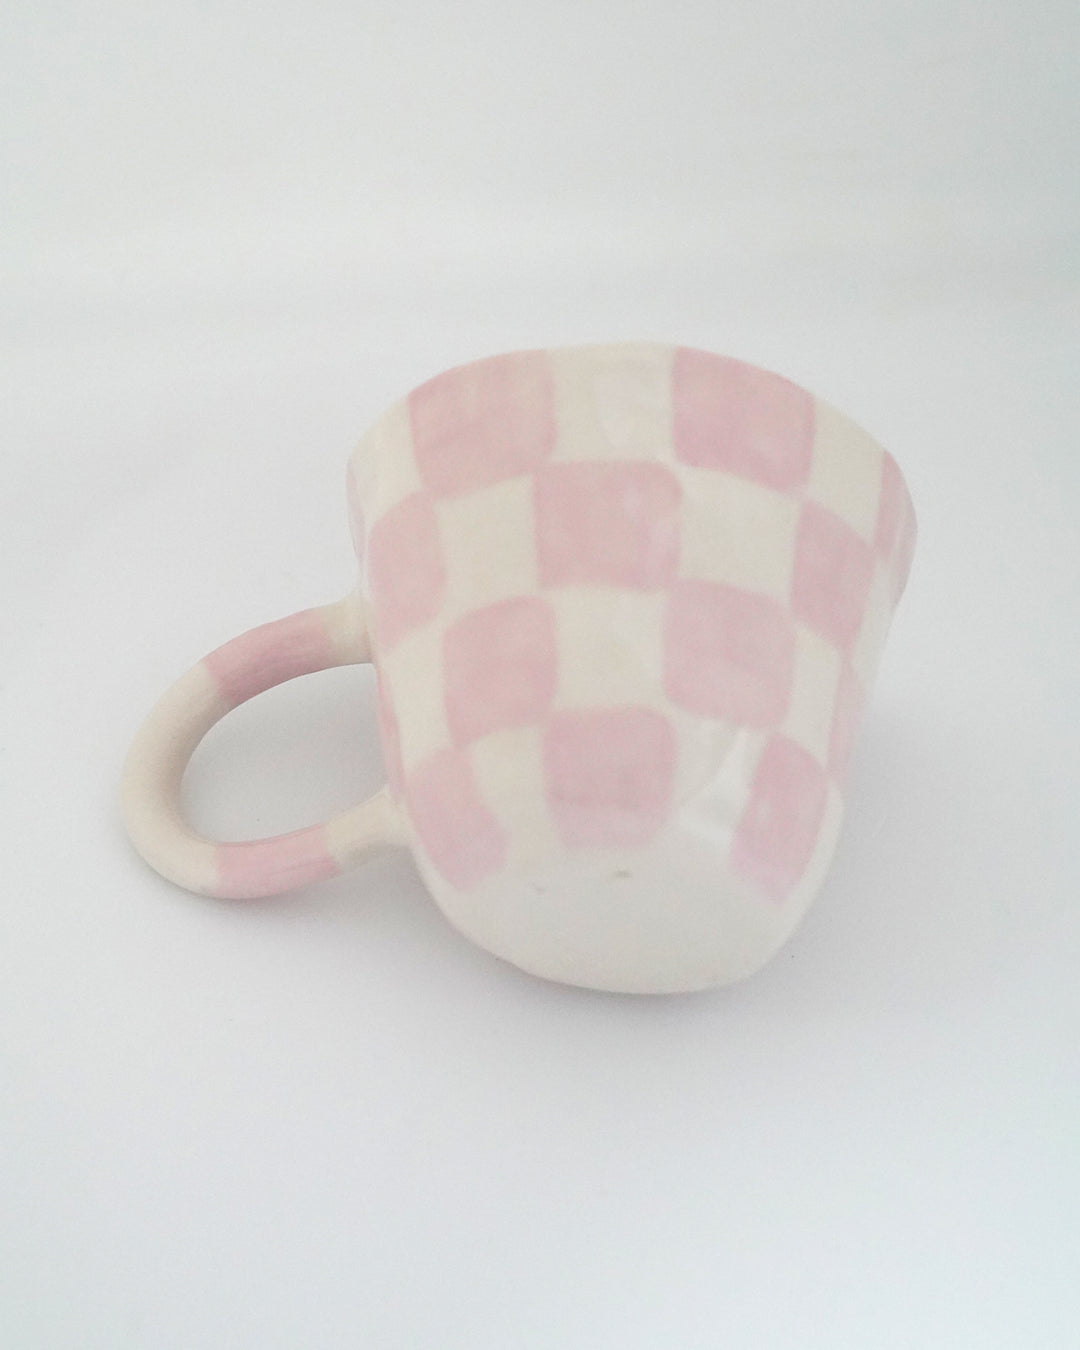 Check Mug / Candy Pink